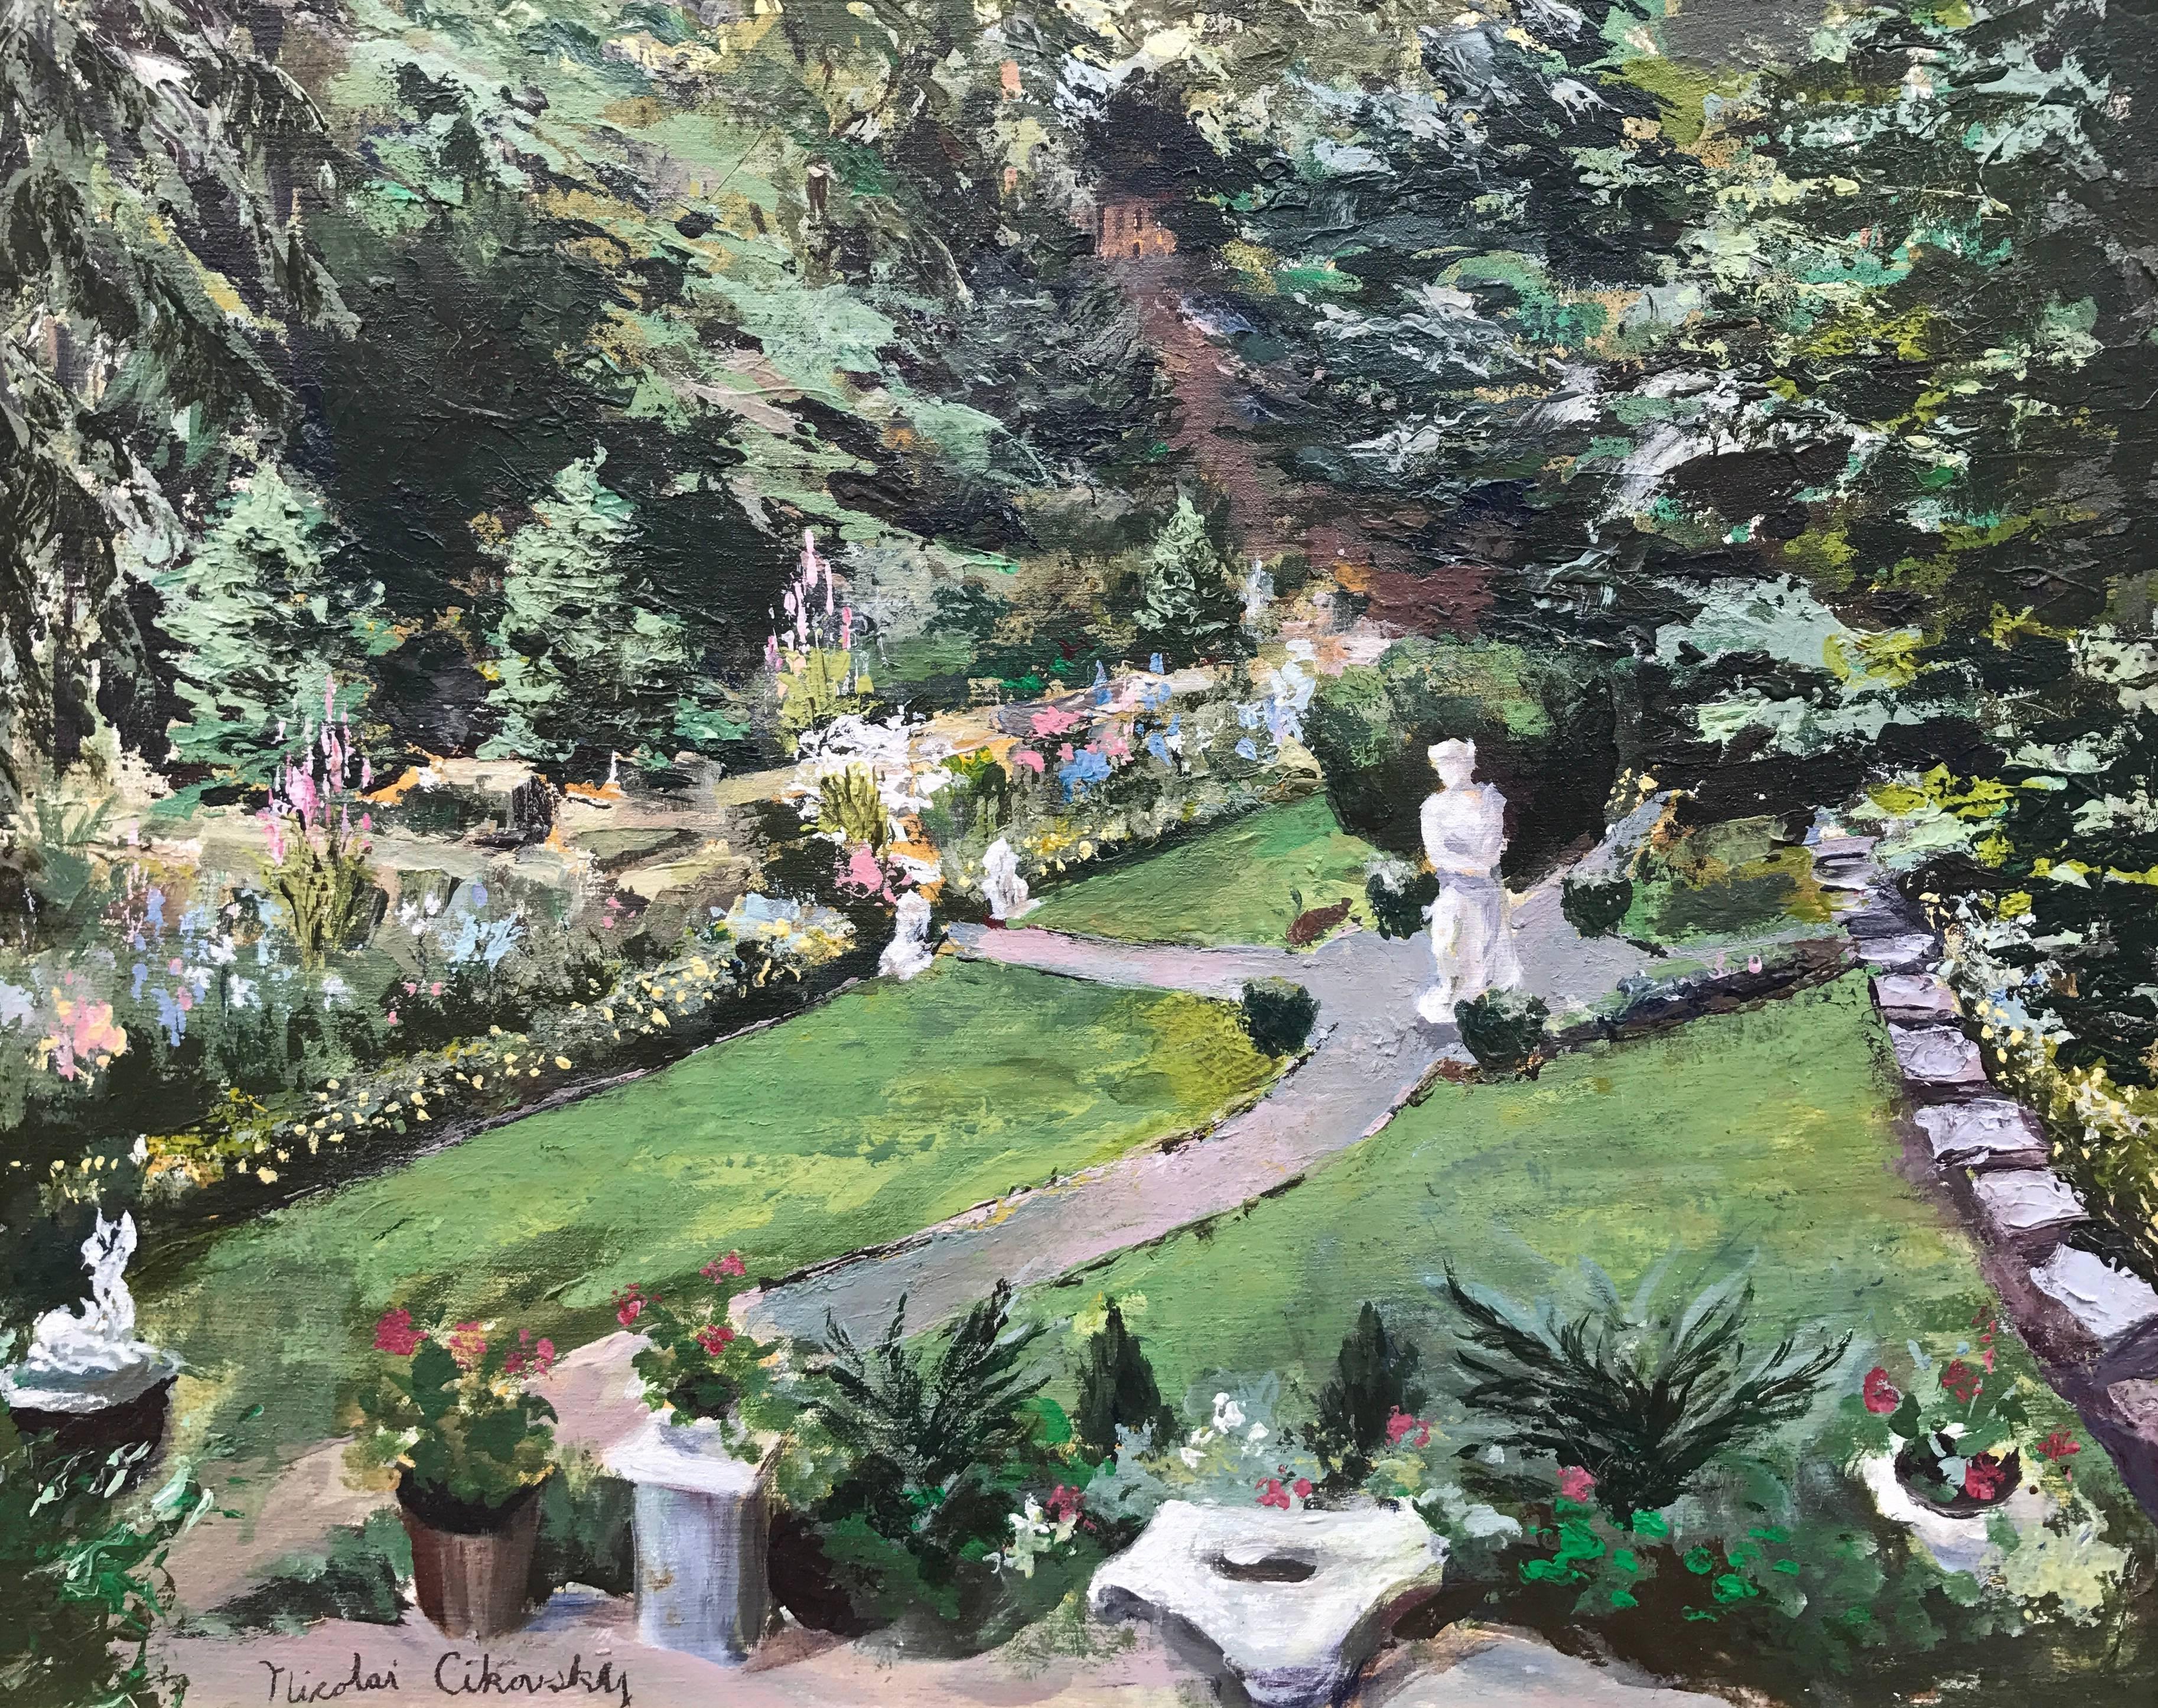 Nicolai Cikovsky Landscape Painting - "Garden Splendor"